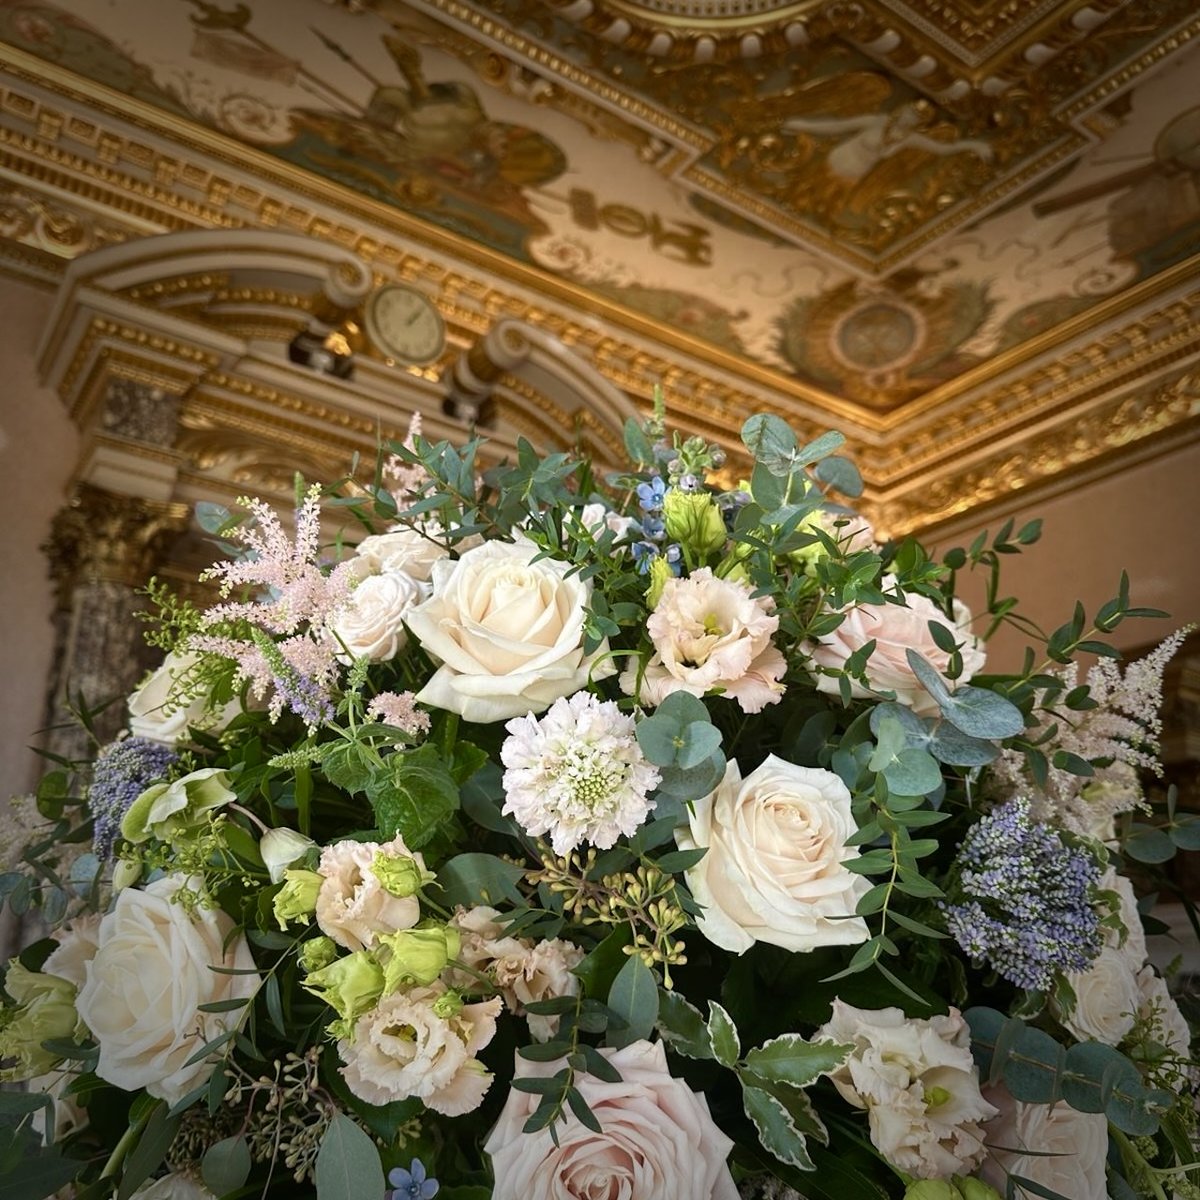 Flowers to compliment the stunning architecture 💐 
#WeddingCeremony #CeremonyFlowers #WeddingFlowers #WeddingFlorist  #AshridgeEstate #Hertfordshire #HemelHempstead #MaplesFlowers